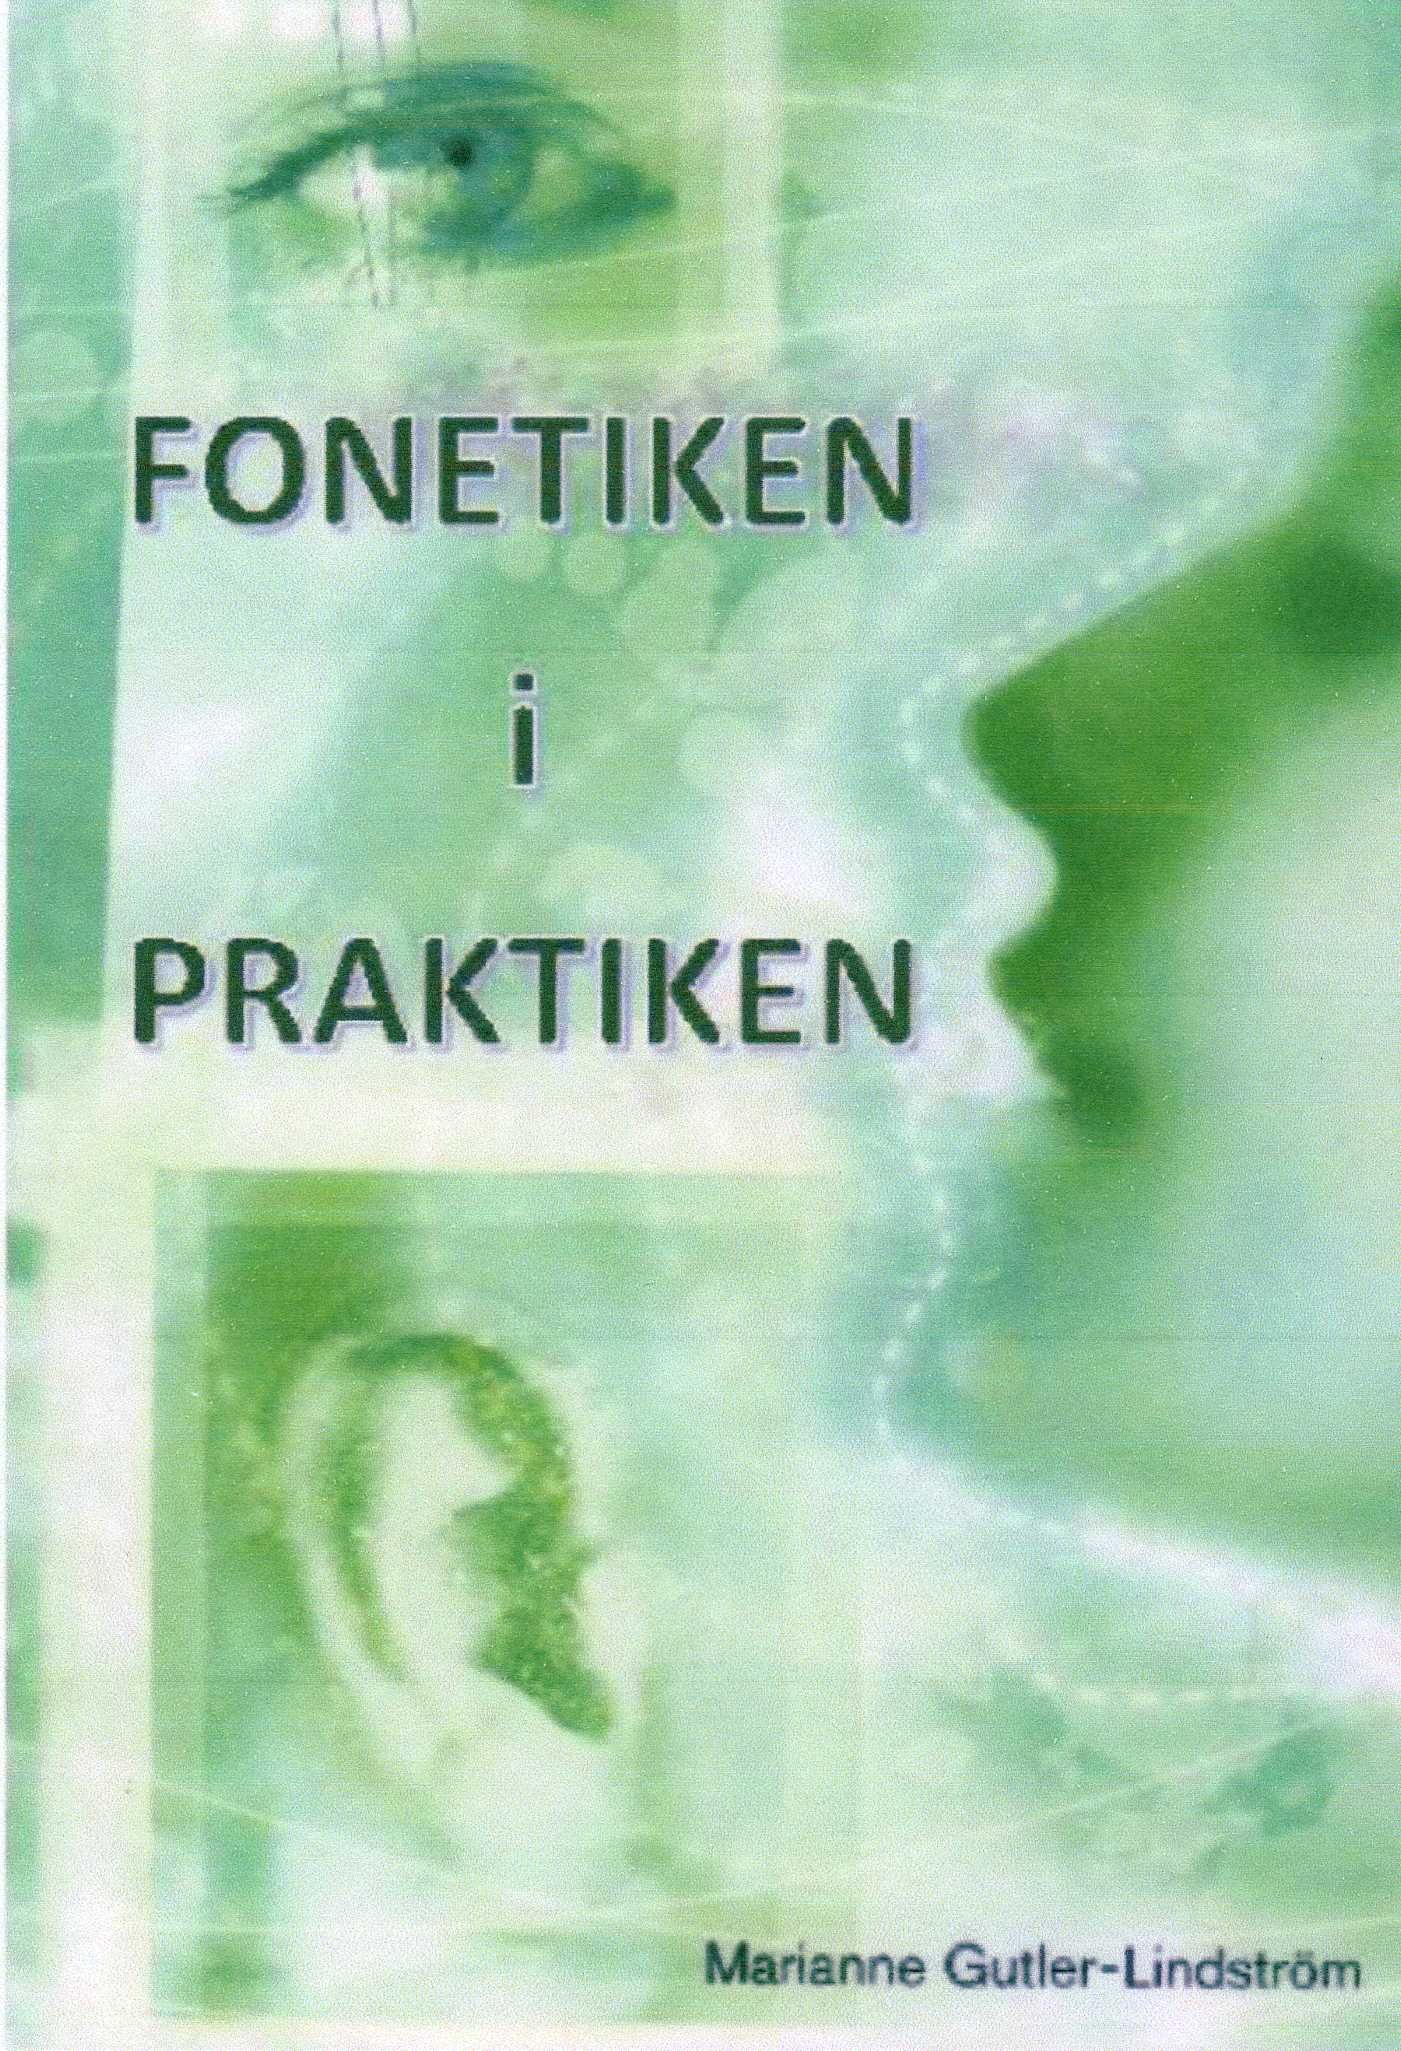 Fonetiken i praktiken, eBook by Marianne Gutler Lindström